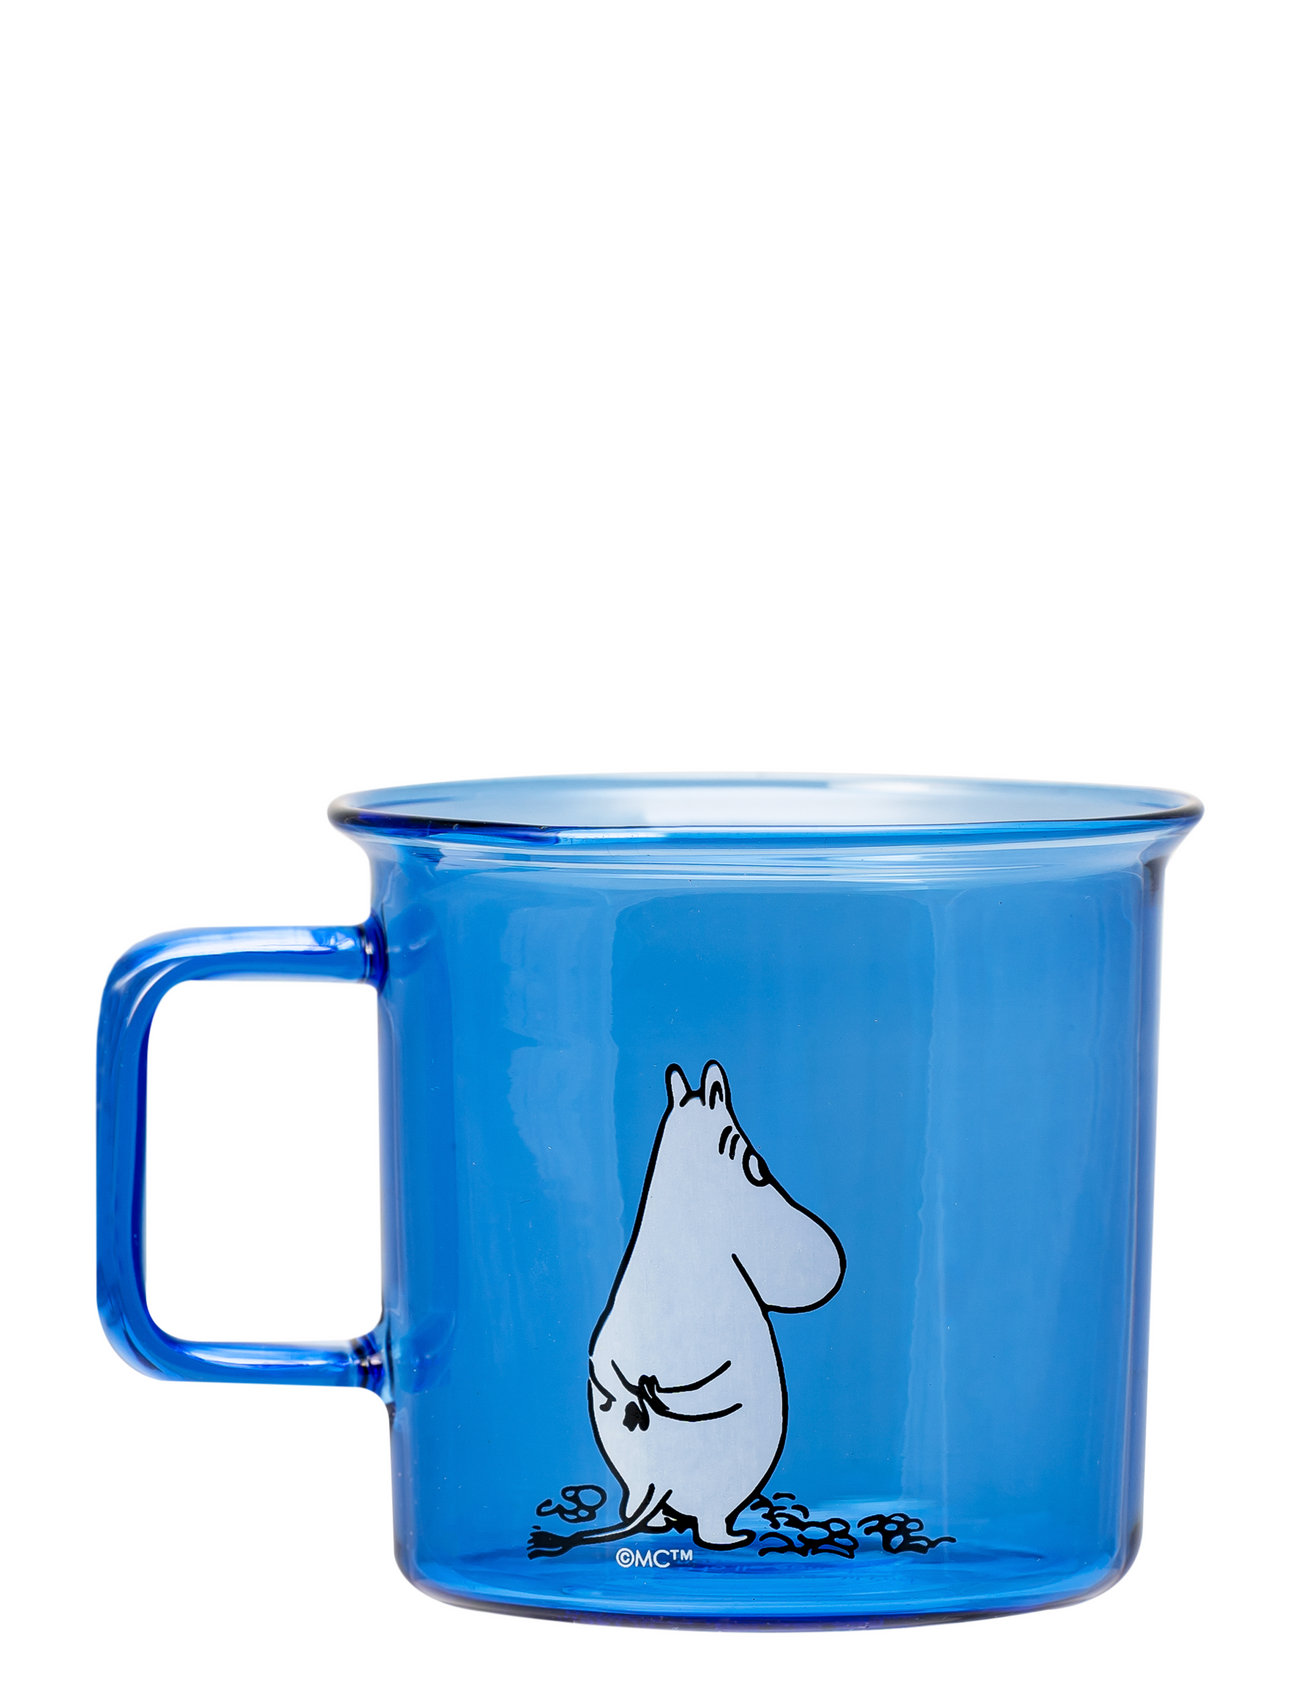 Moomin Glass Mug Moomin Home Tableware Cups & Mugs Coffee Cups Blue Moomin